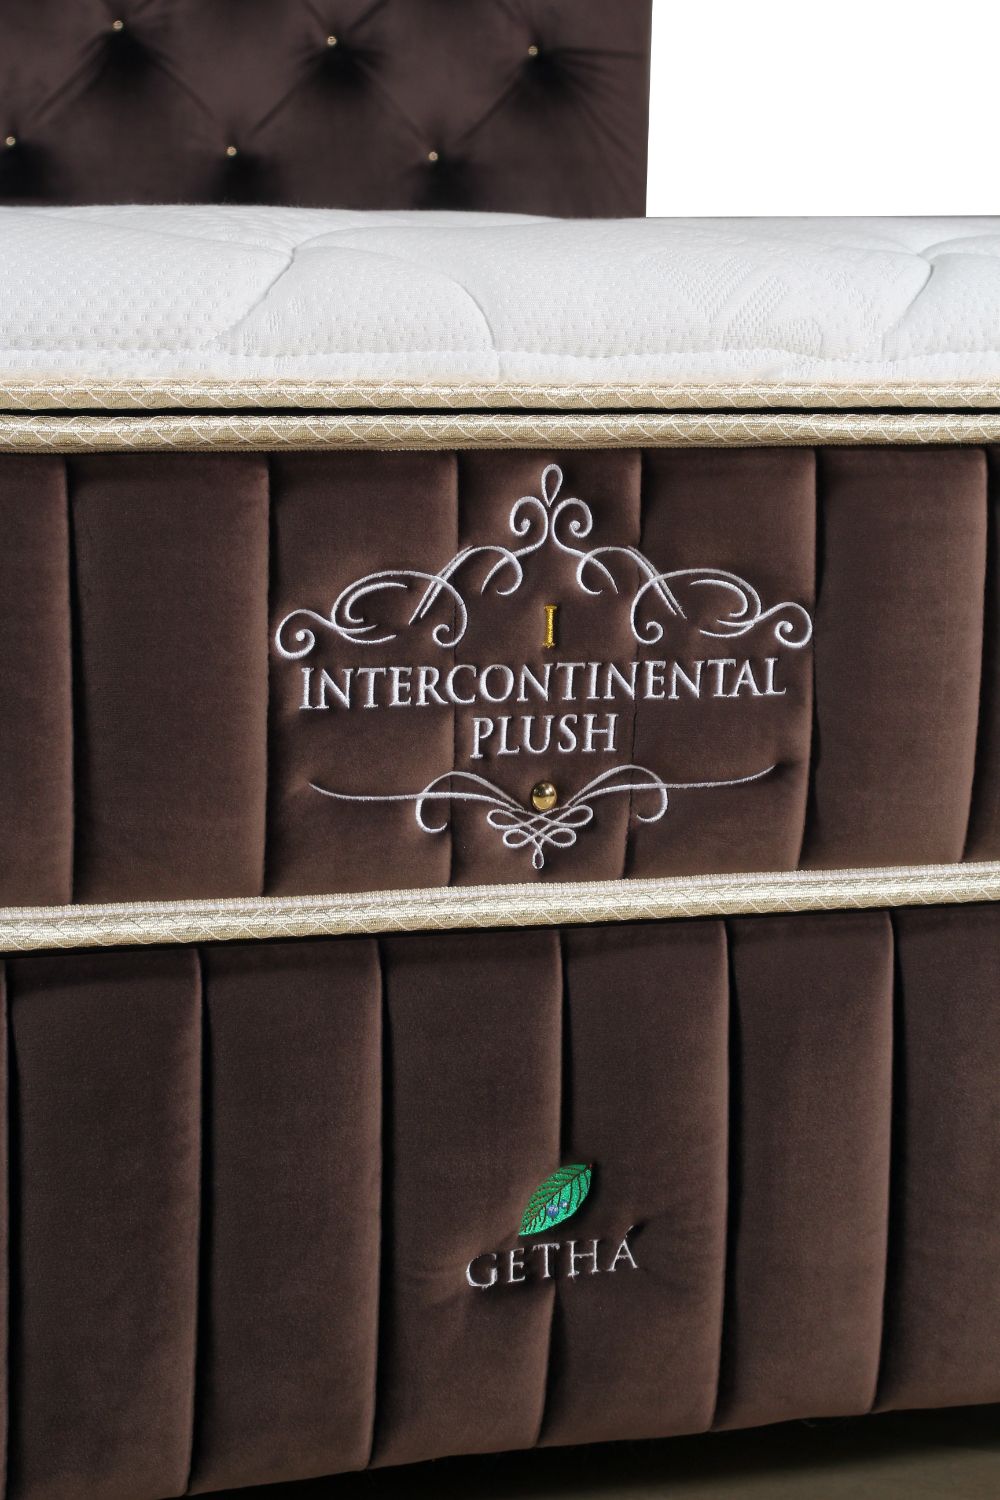 Getha Intercontinental Plush I latex mattress with body support